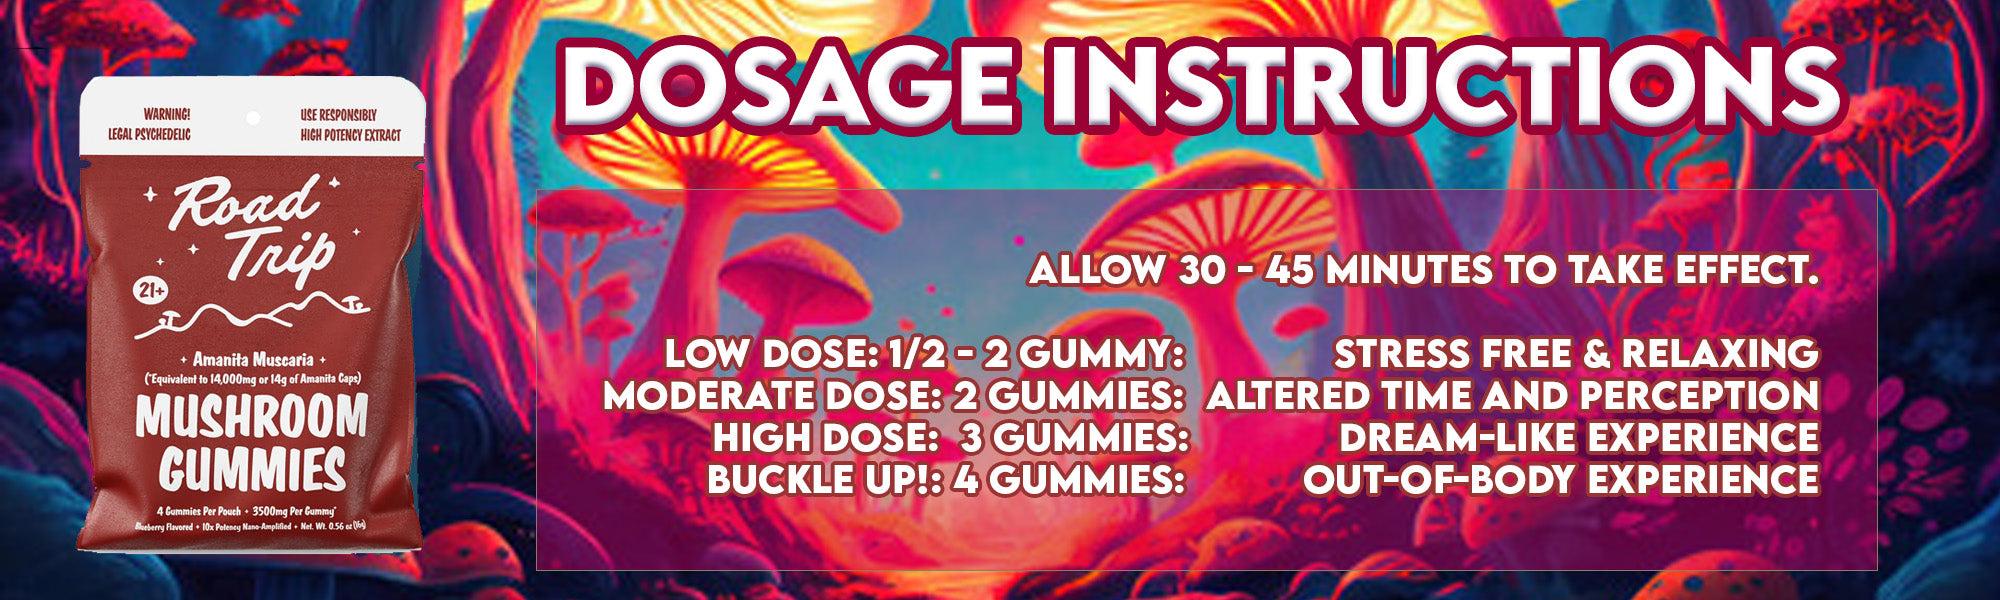 Dosage Instructions for Road Trip Amanita Mushroom Gummies